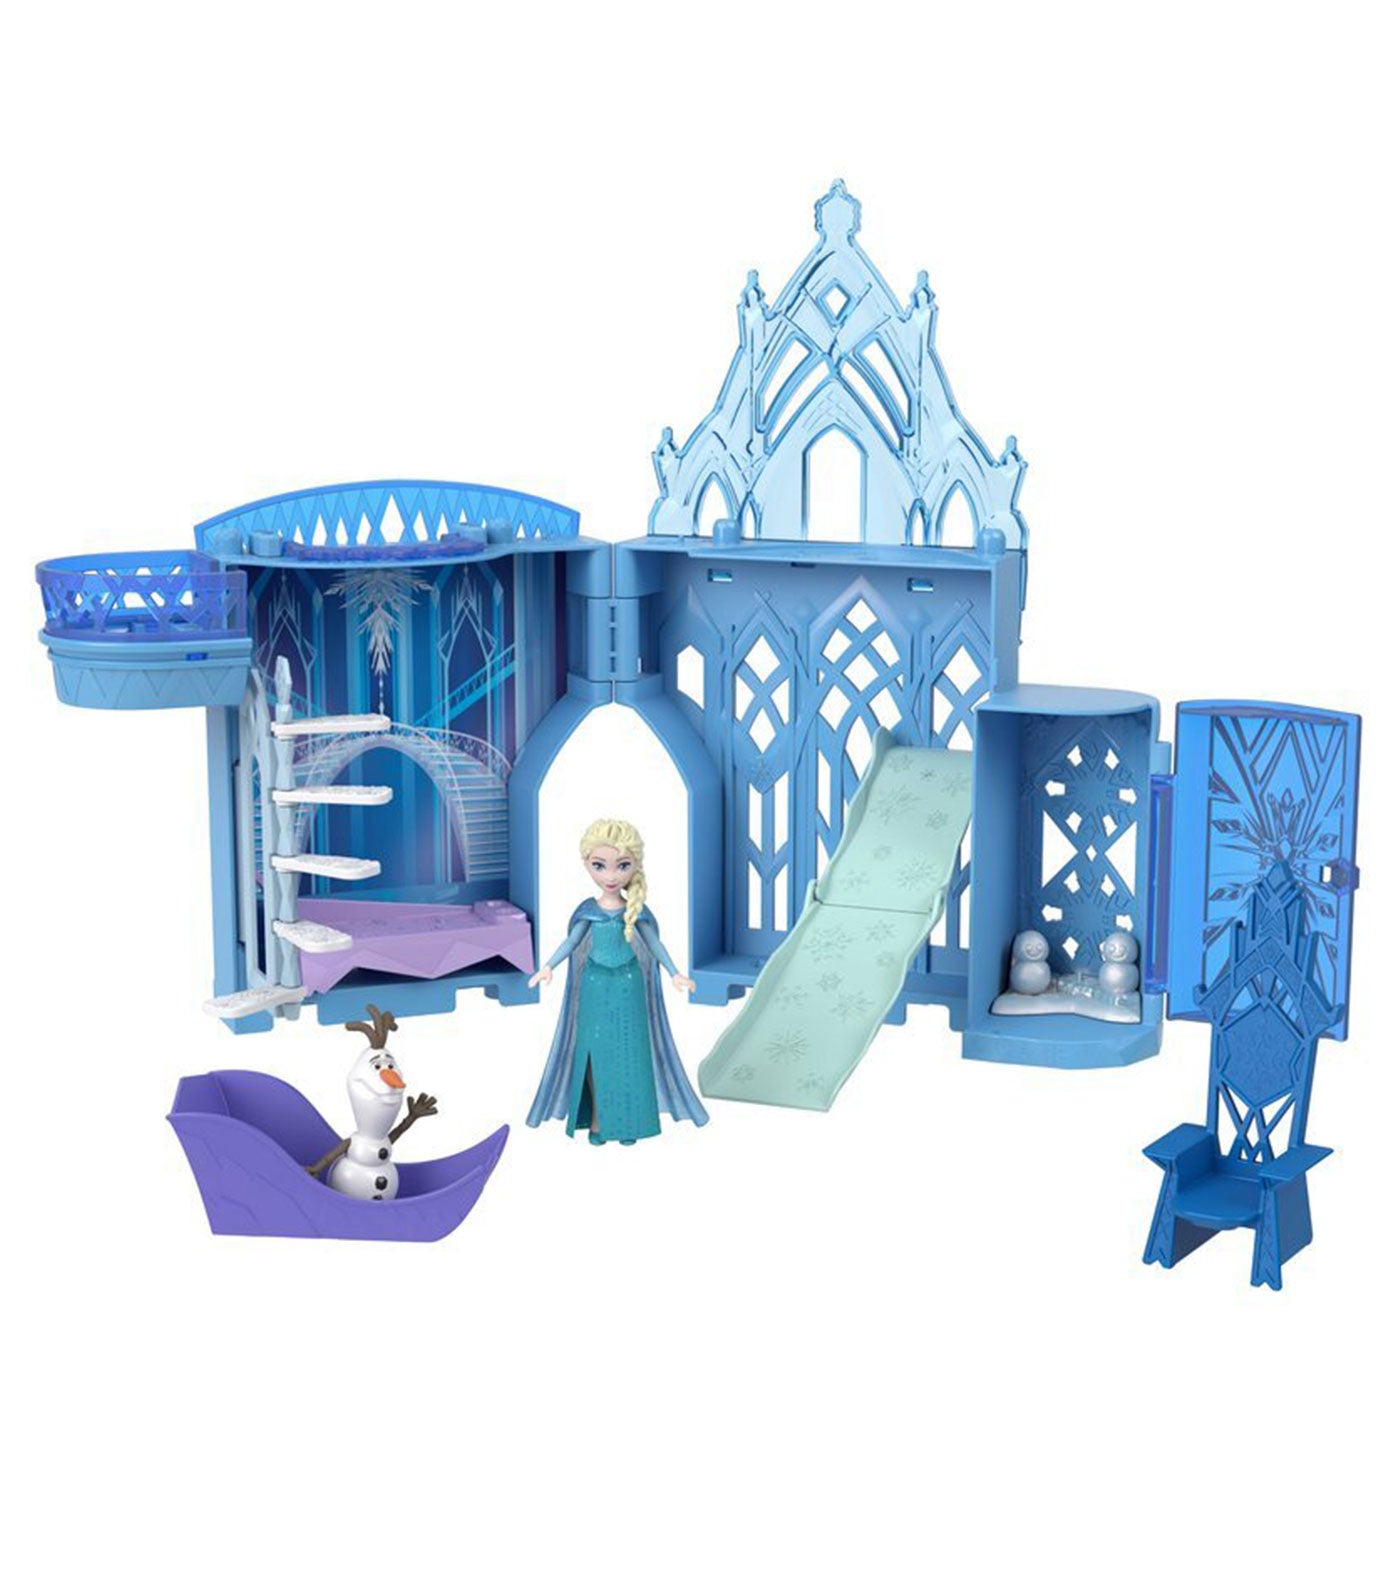 Frozen Elsa's Ice Palace